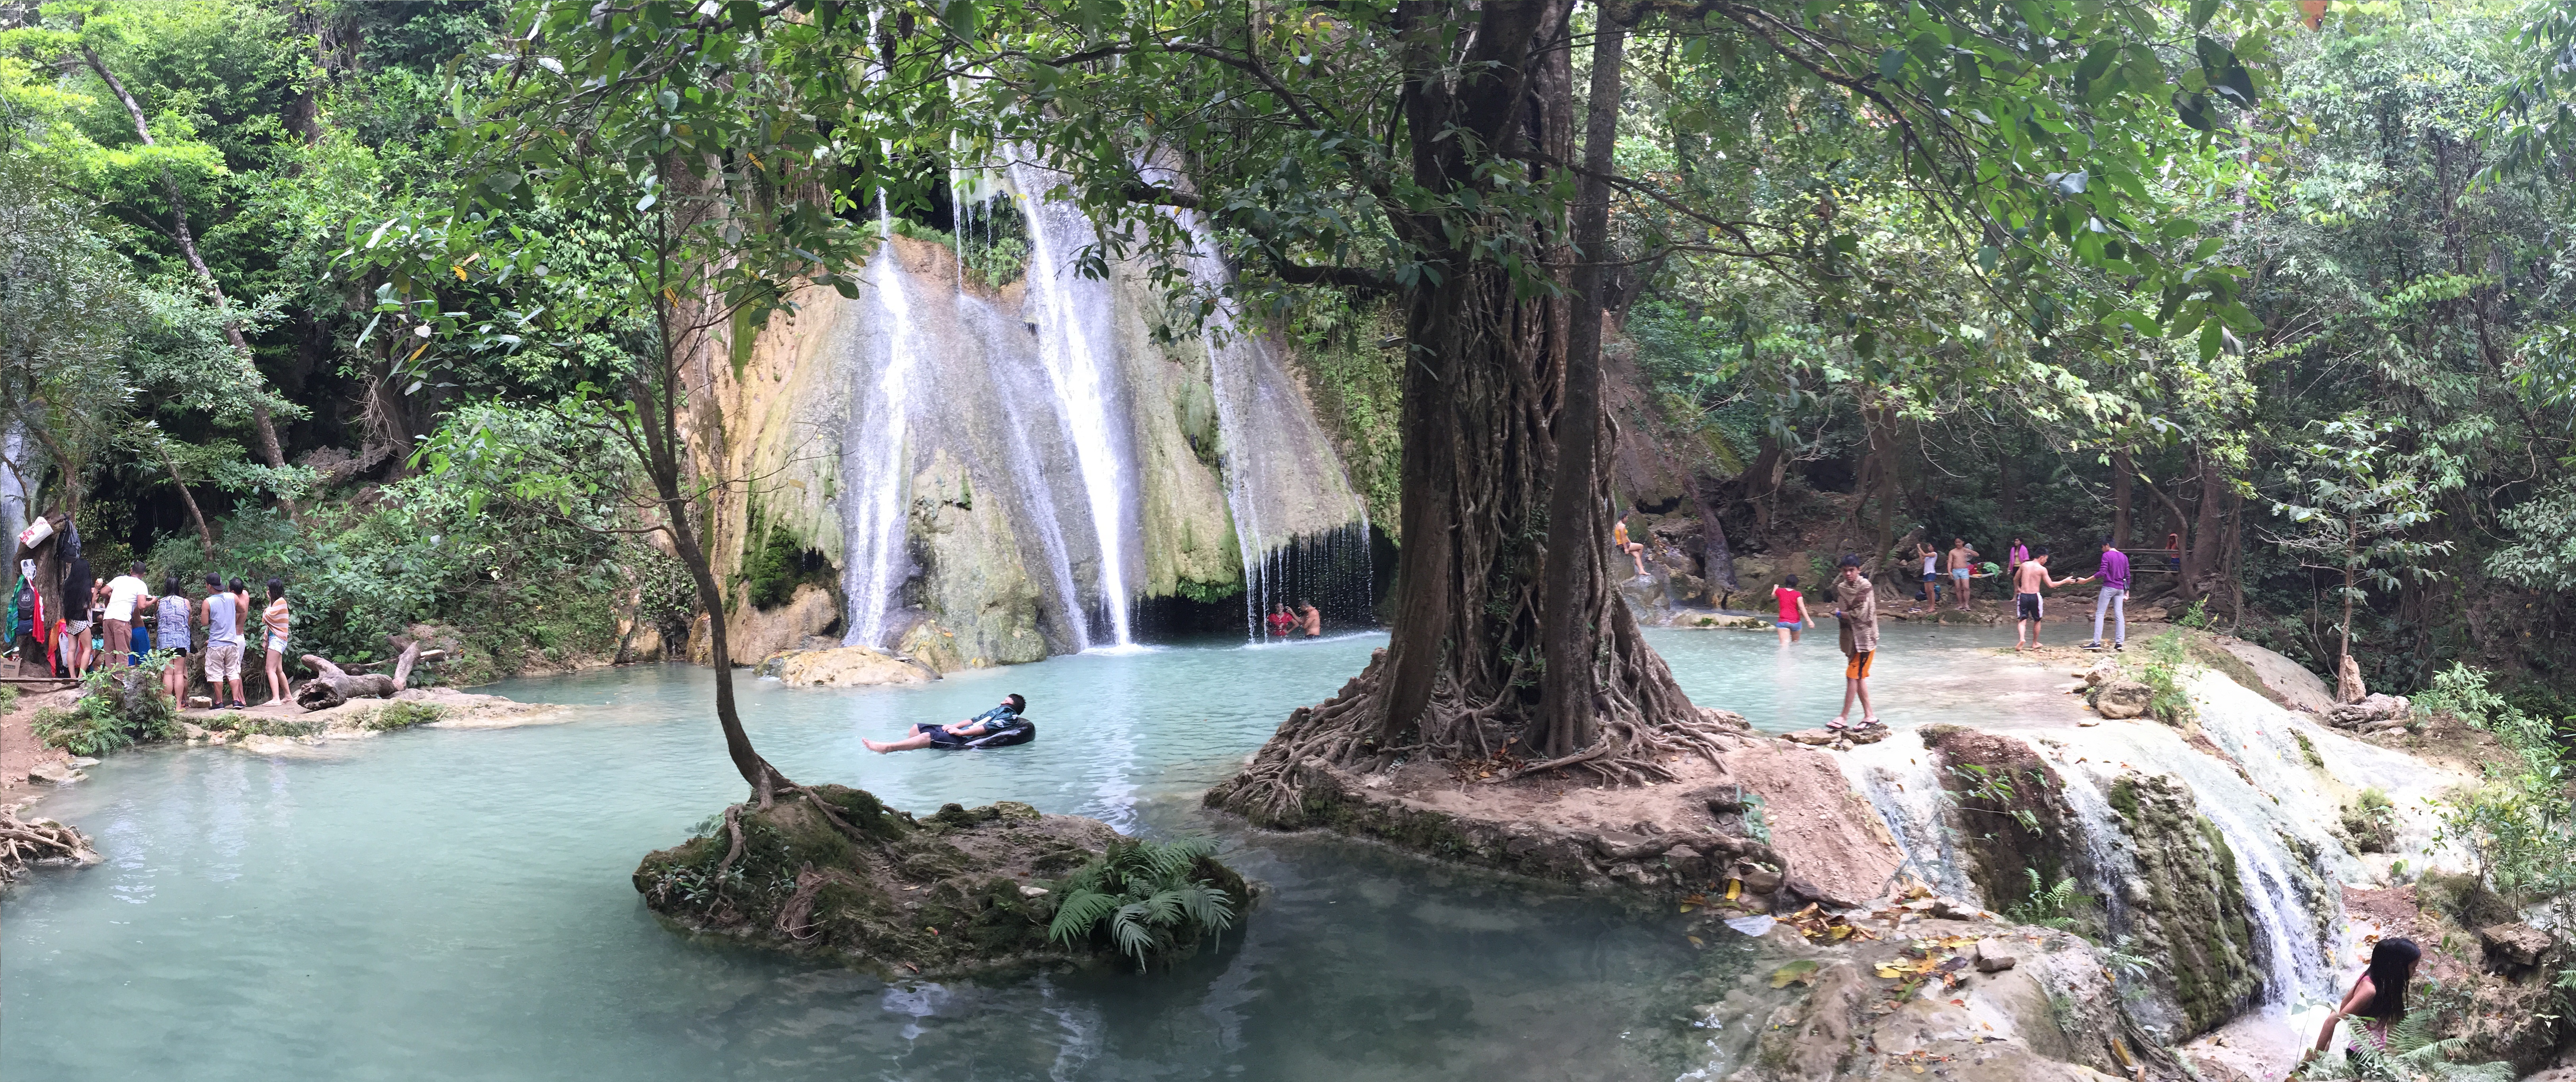 Batlag falls a truly majestic waterfall in Rizal